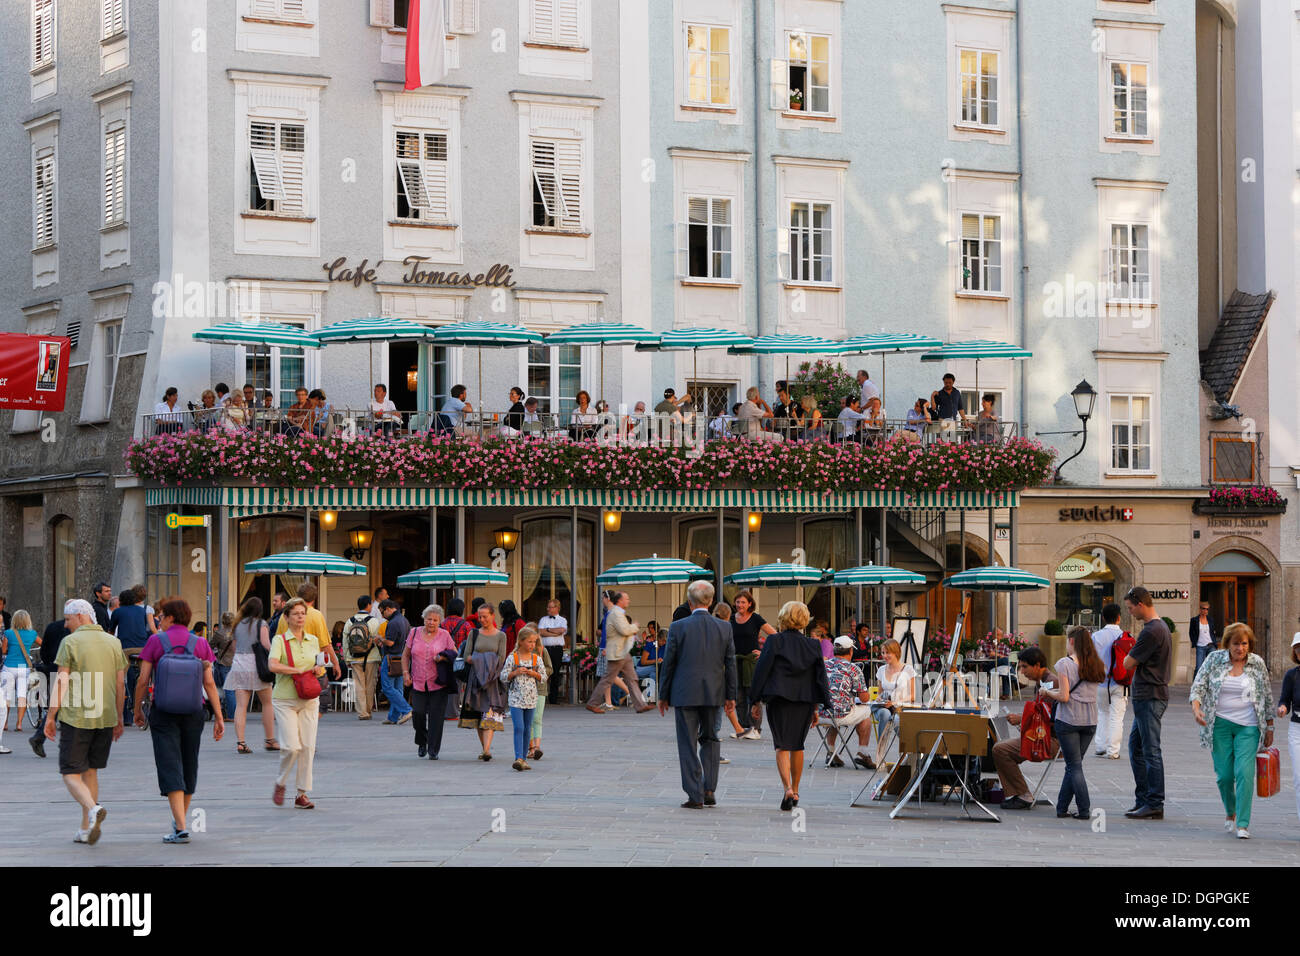 Tomaselli Café, Alter Markt square, historic district, Salzburg, Austria, Europe, PublicGround Stock Photo